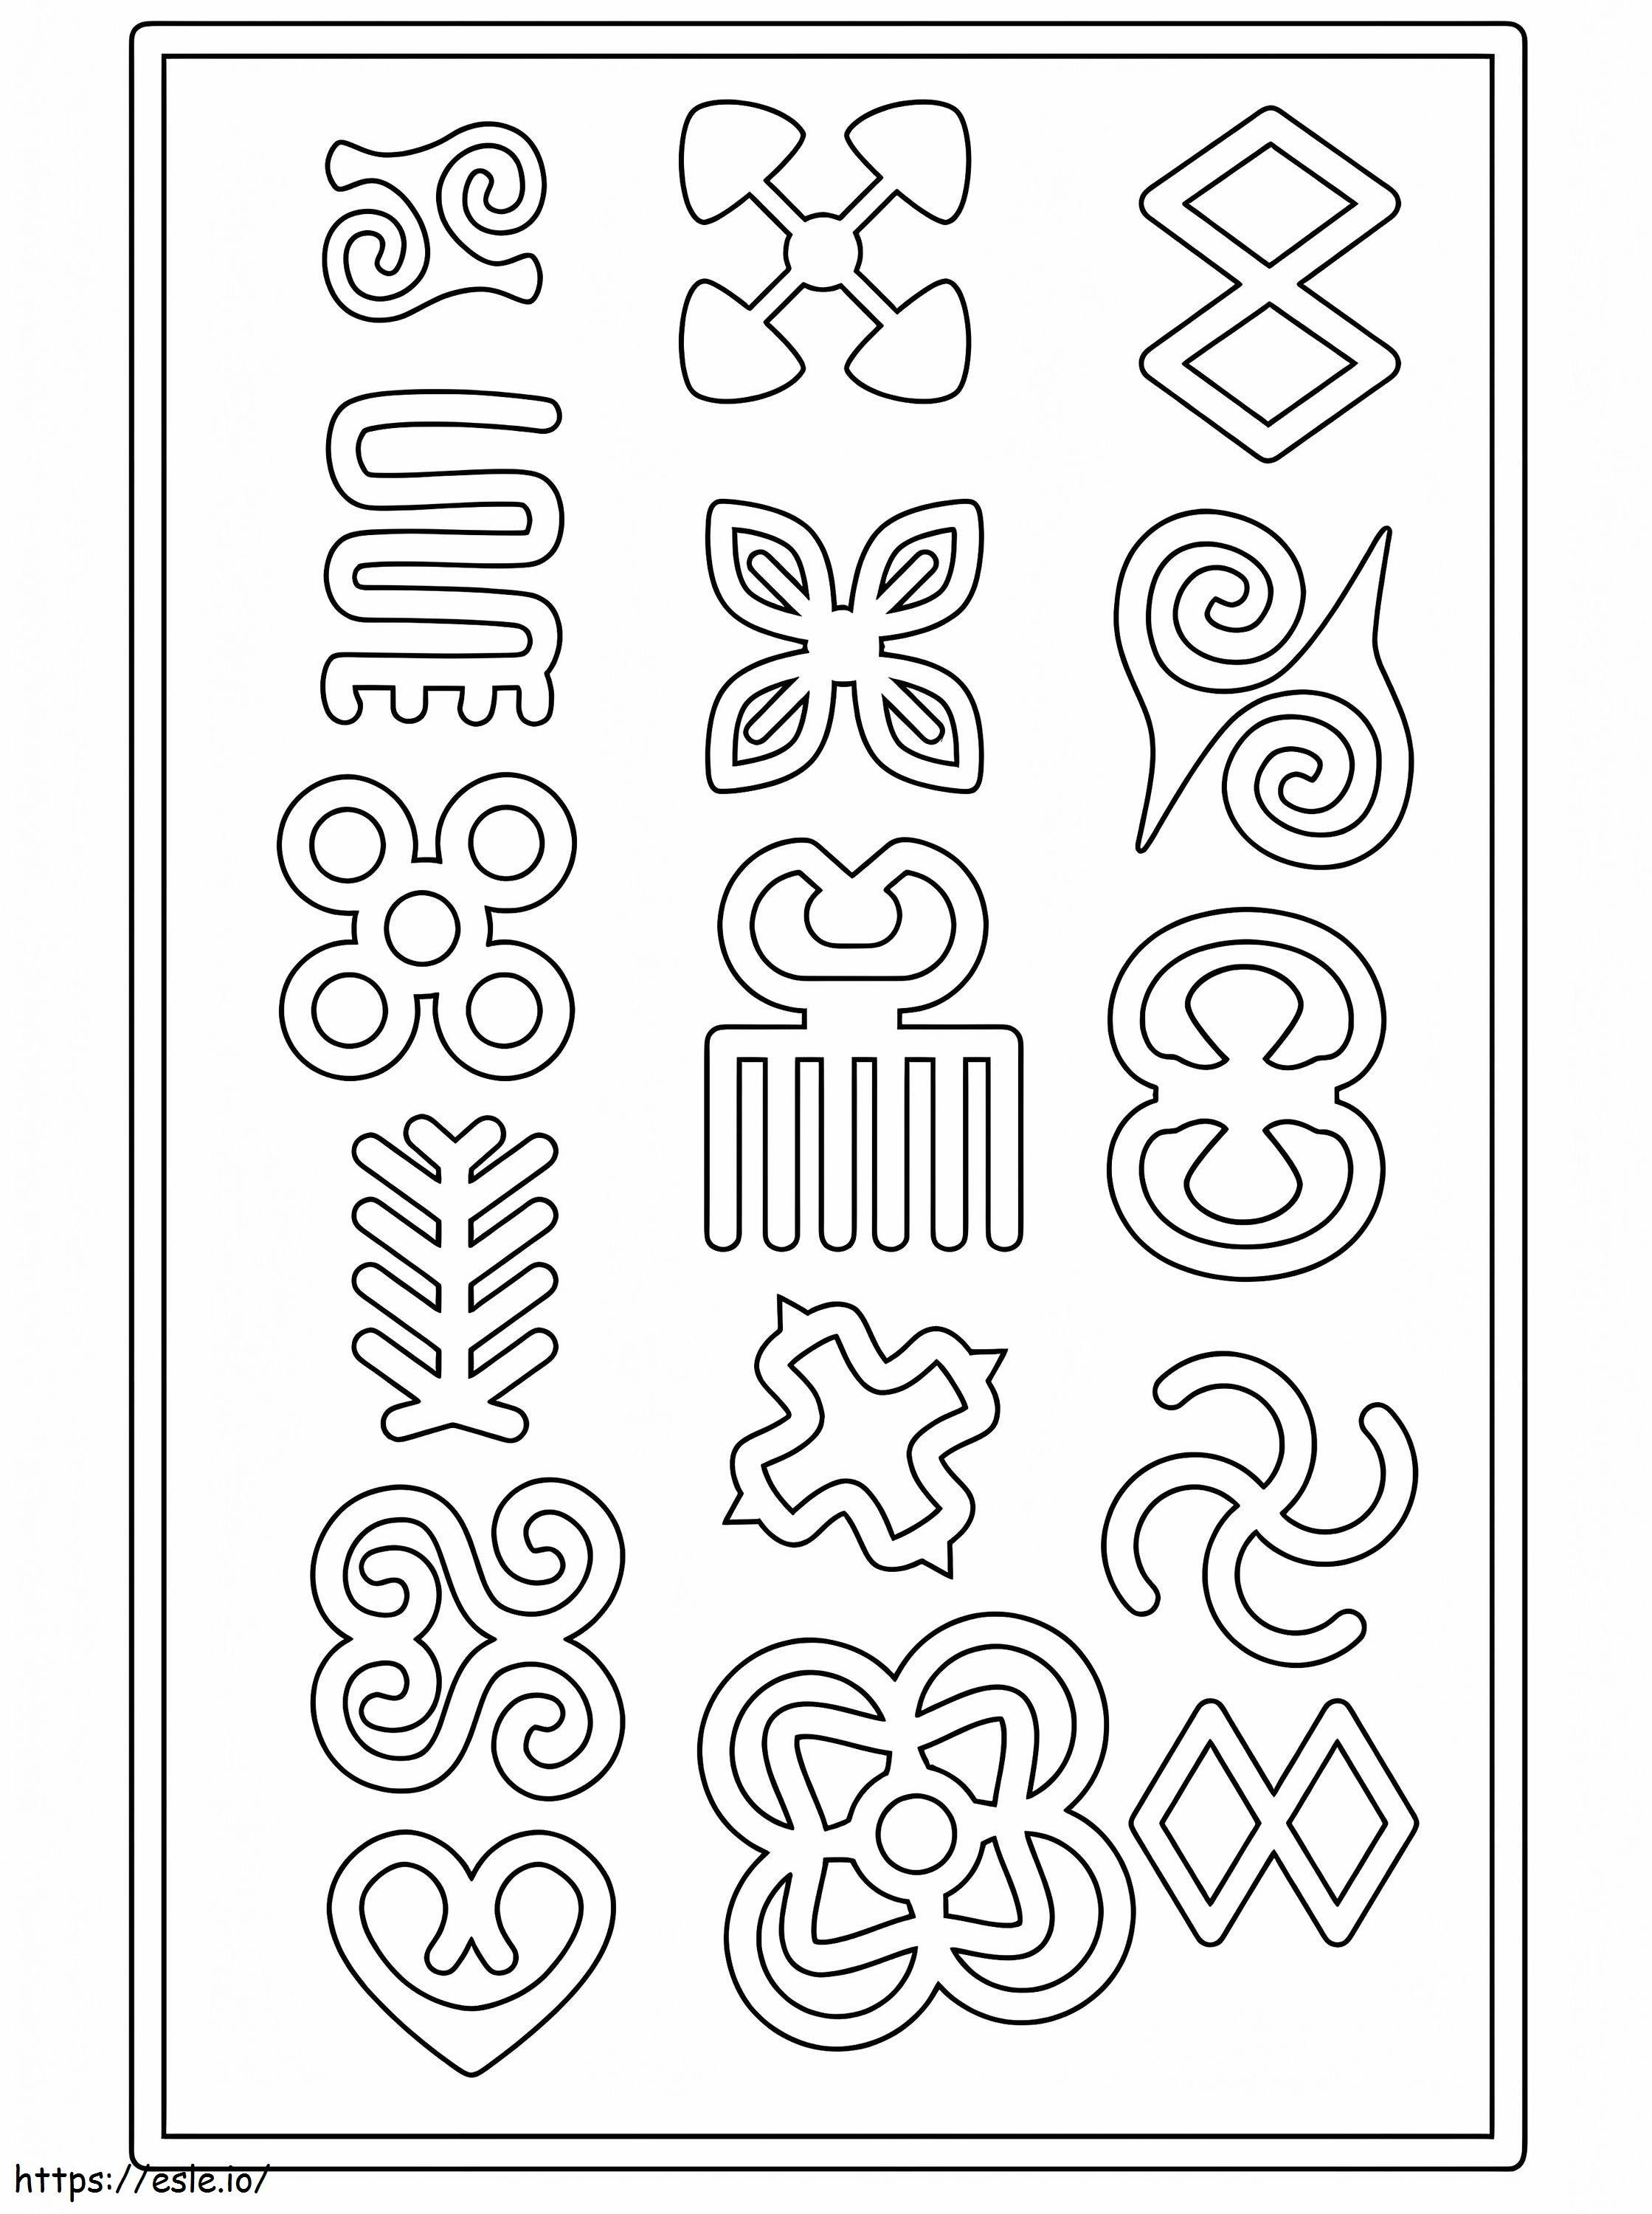 Adinkra Symbols coloring page